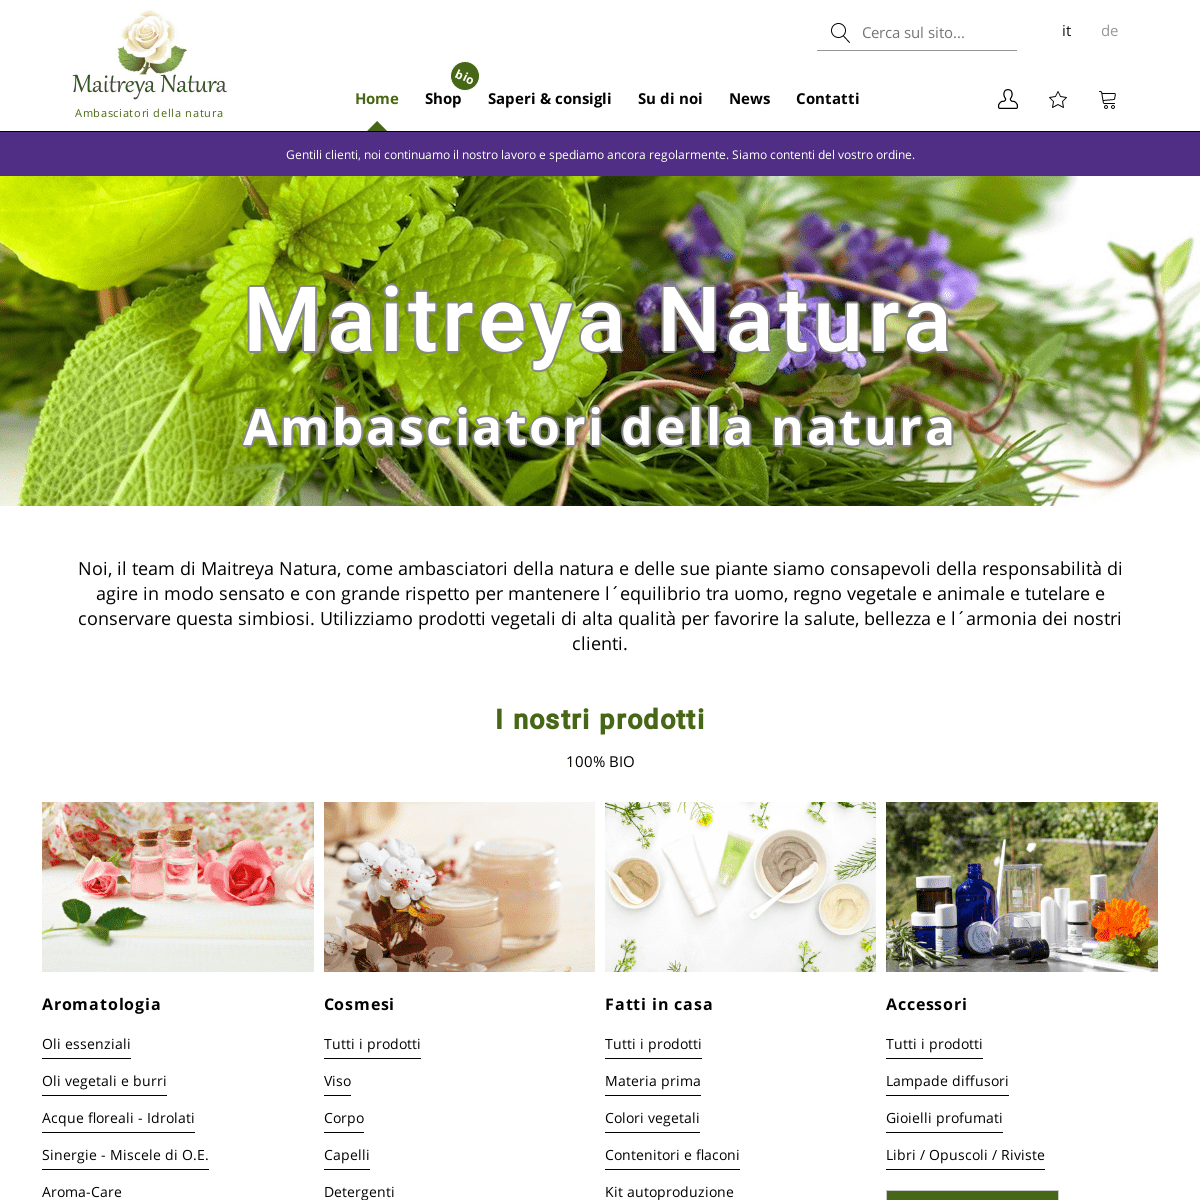 A complete backup of maitreya-natura.com